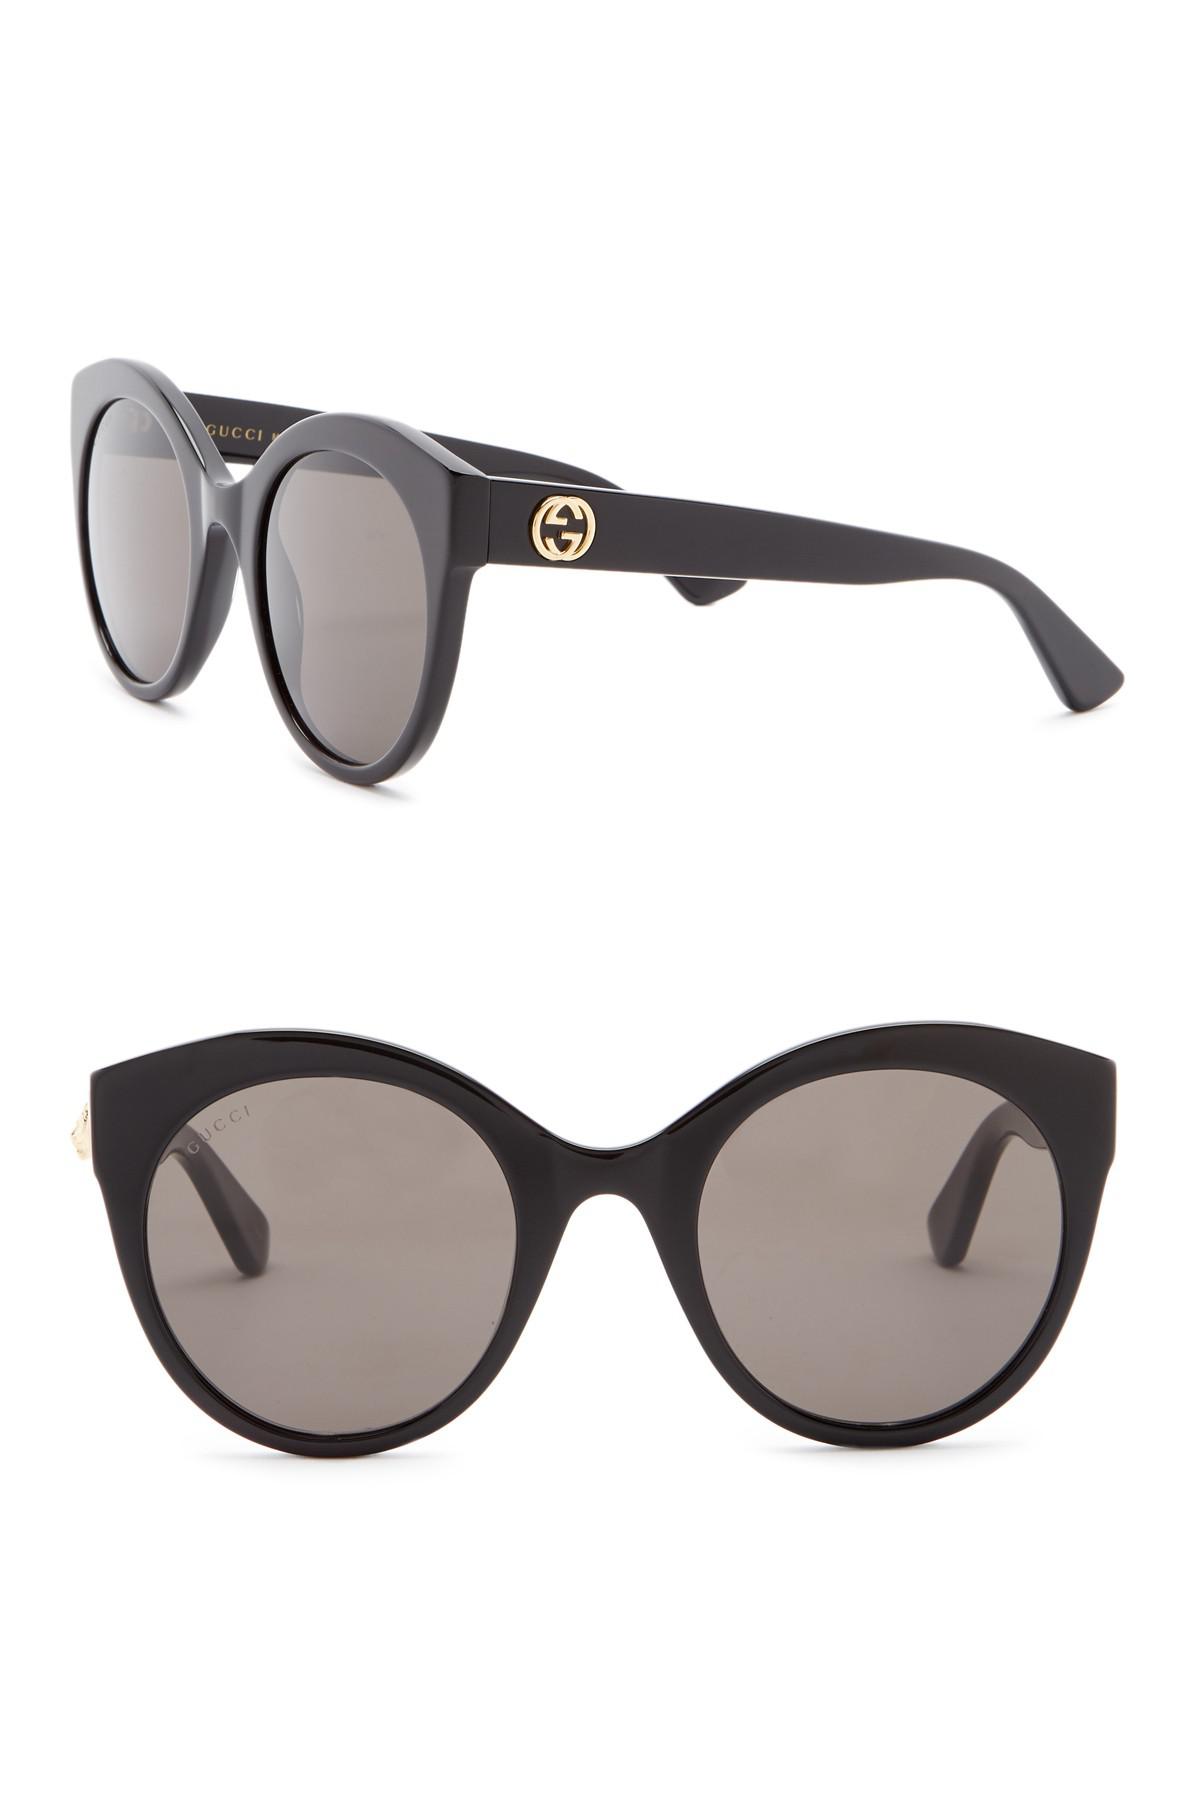 Gucci 52mm Round Cat Eye Sunglasses in Black | Lyst